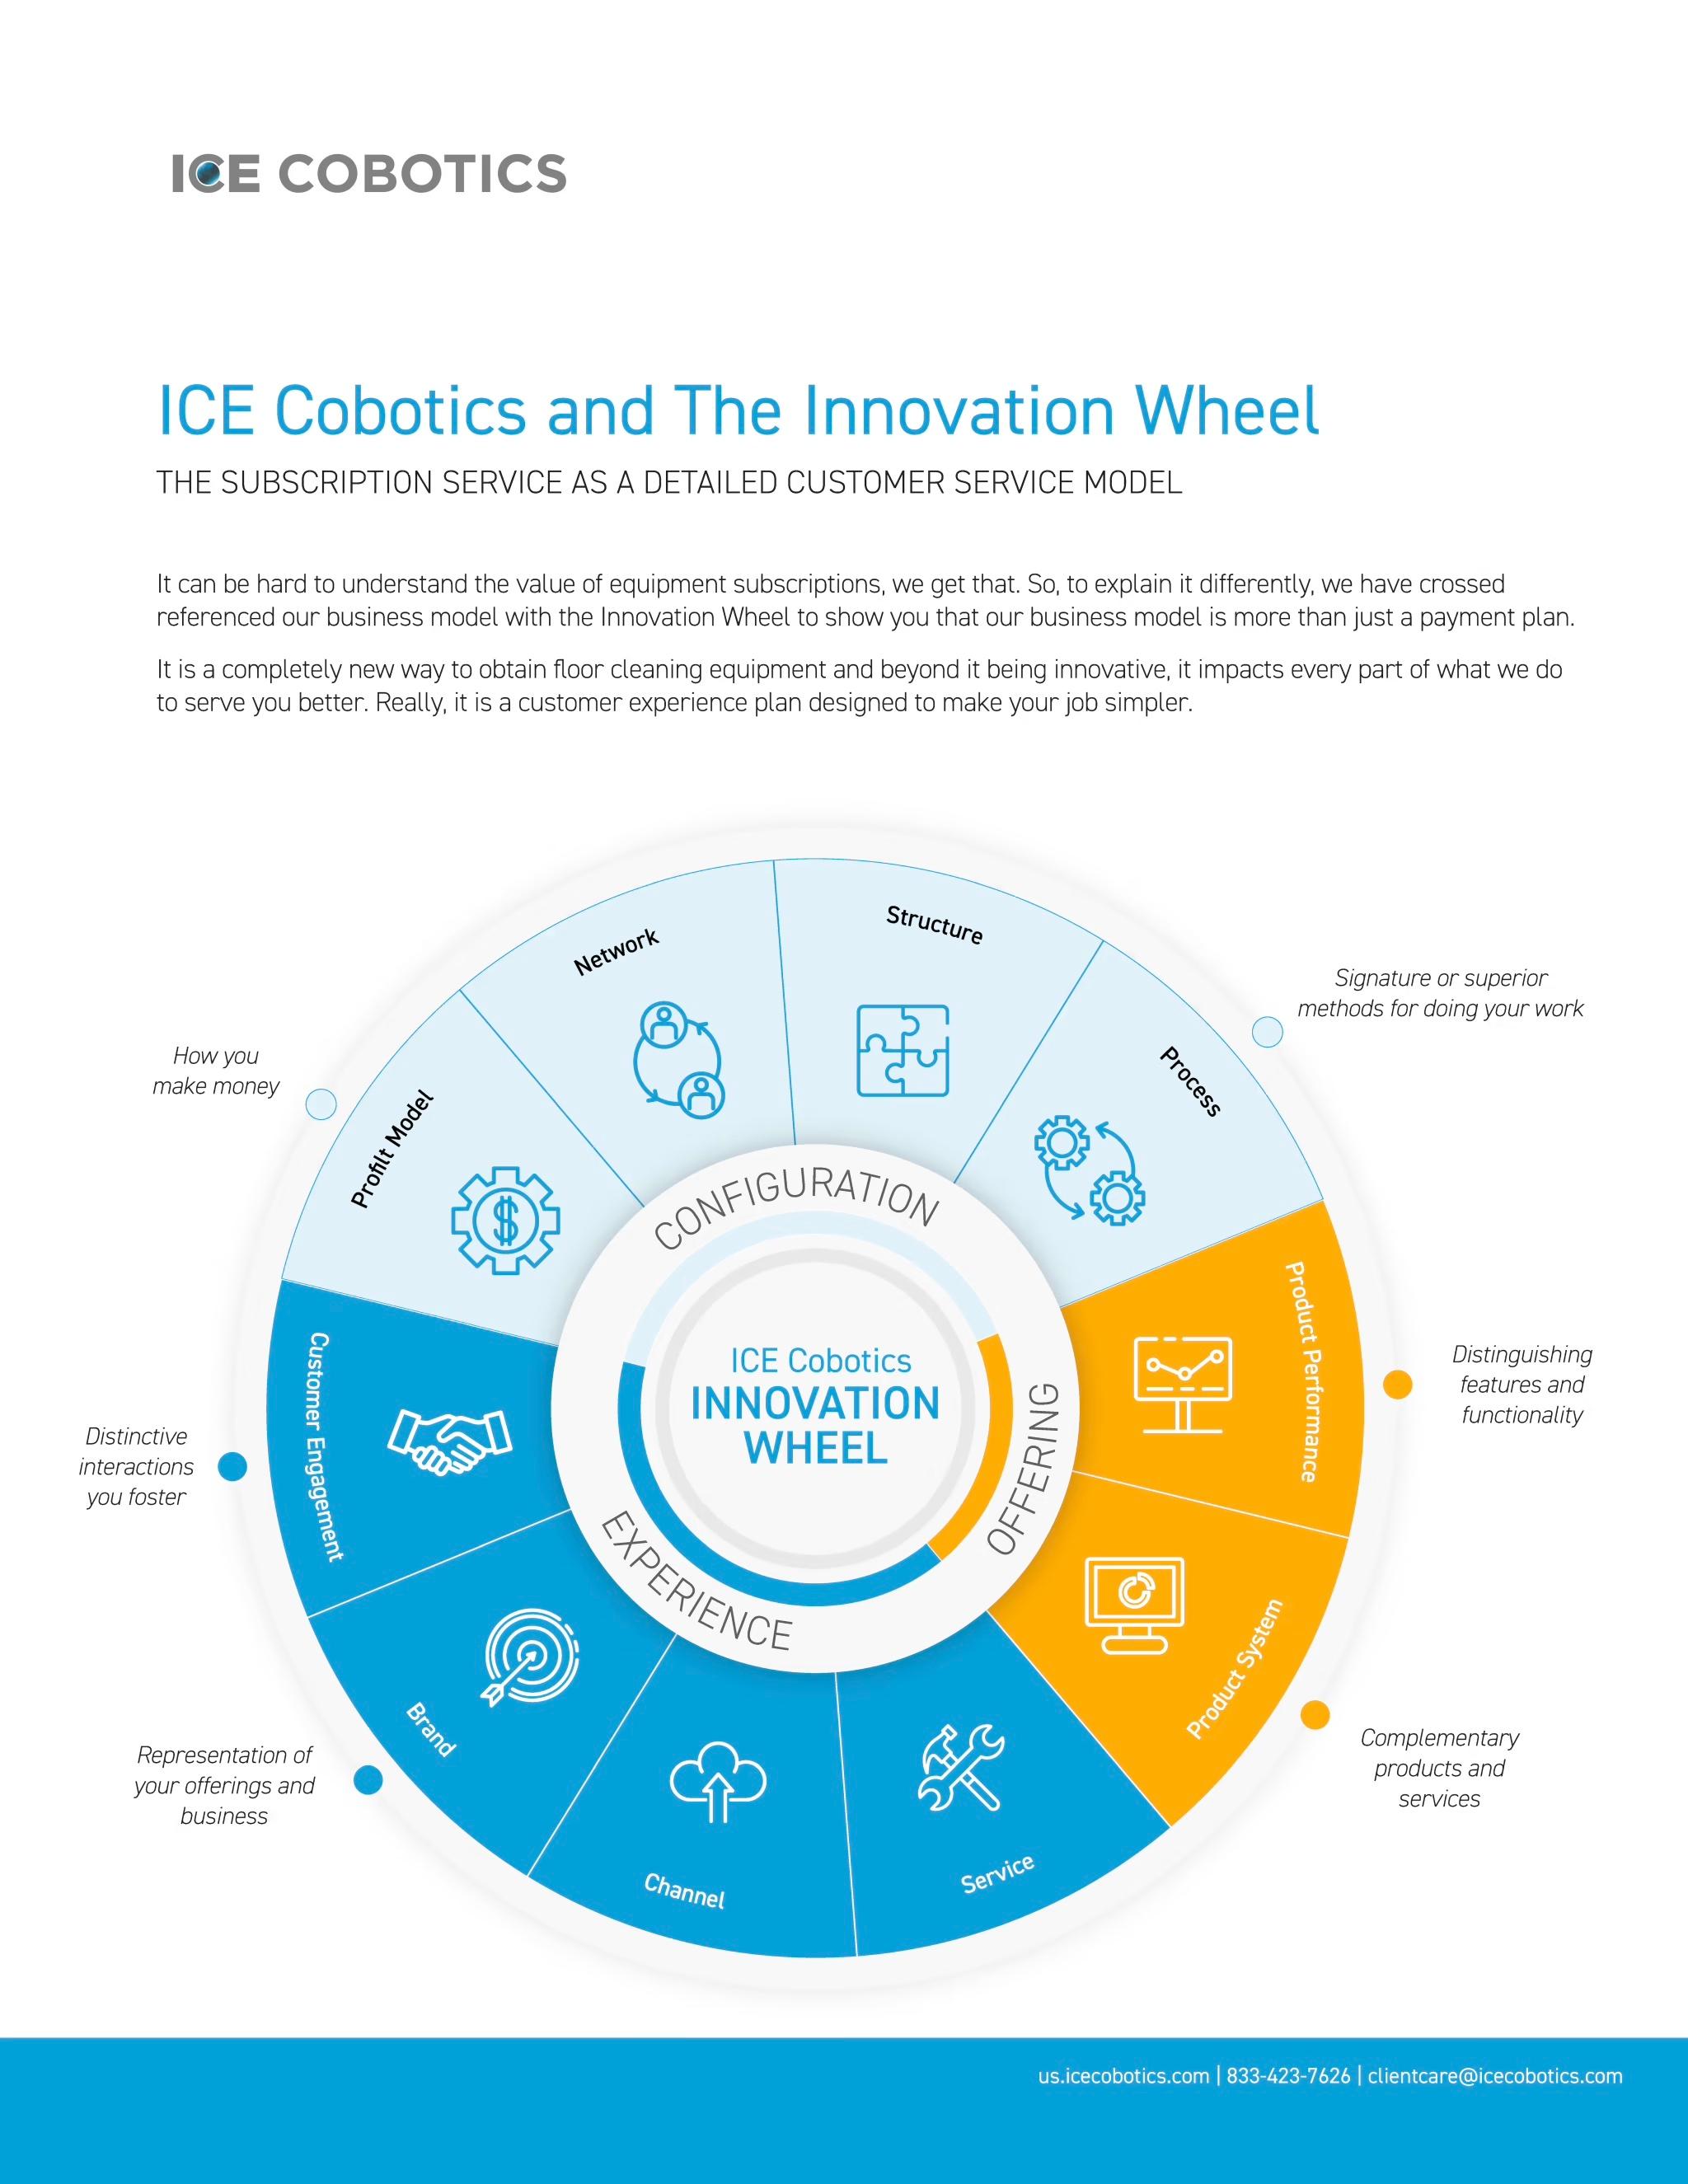 ICE Cobotics, Innovation Wheel, and Subscription Service 